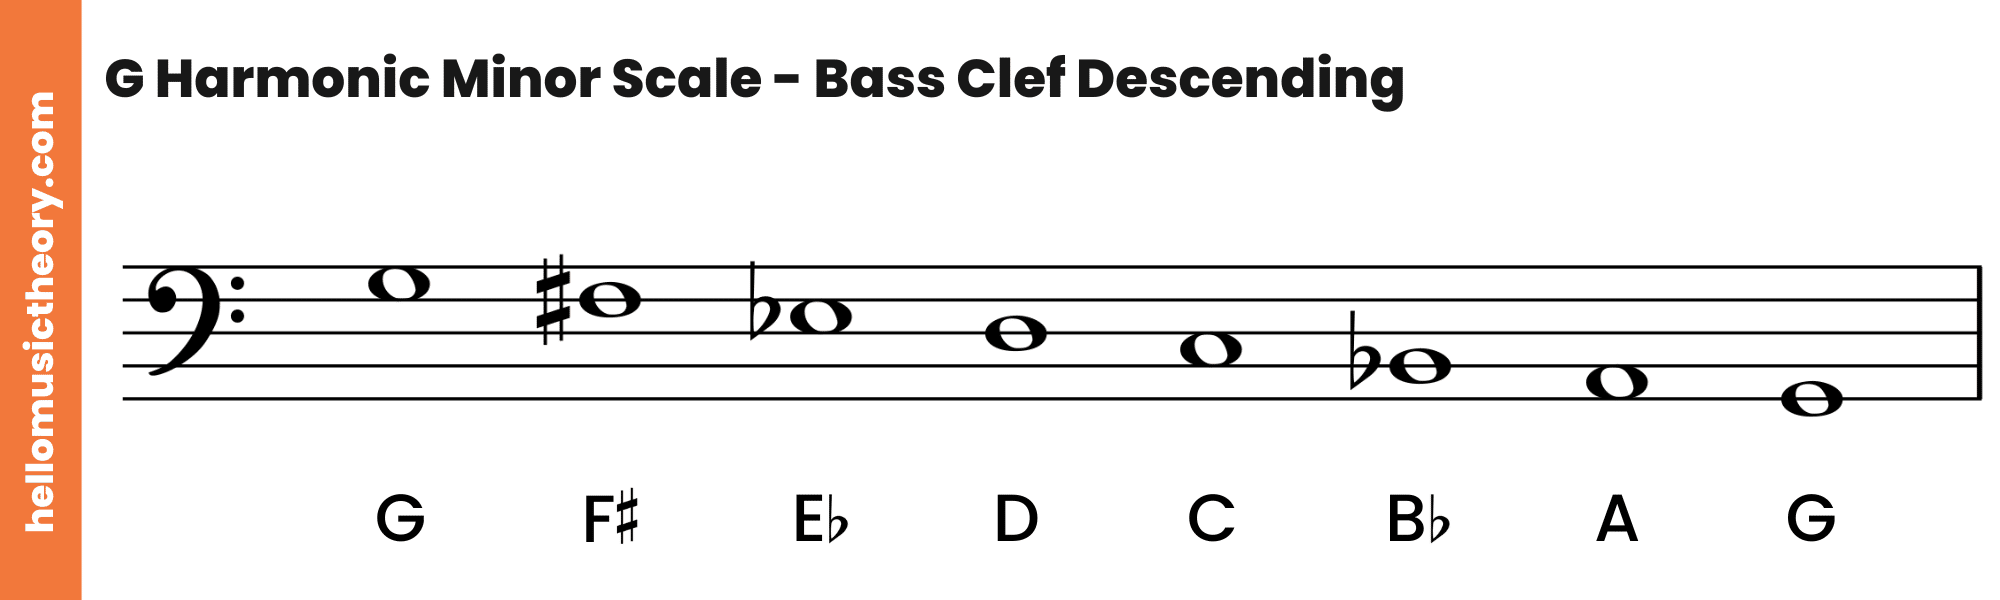 G Harmonic Minor Scale Bass Clef Descending